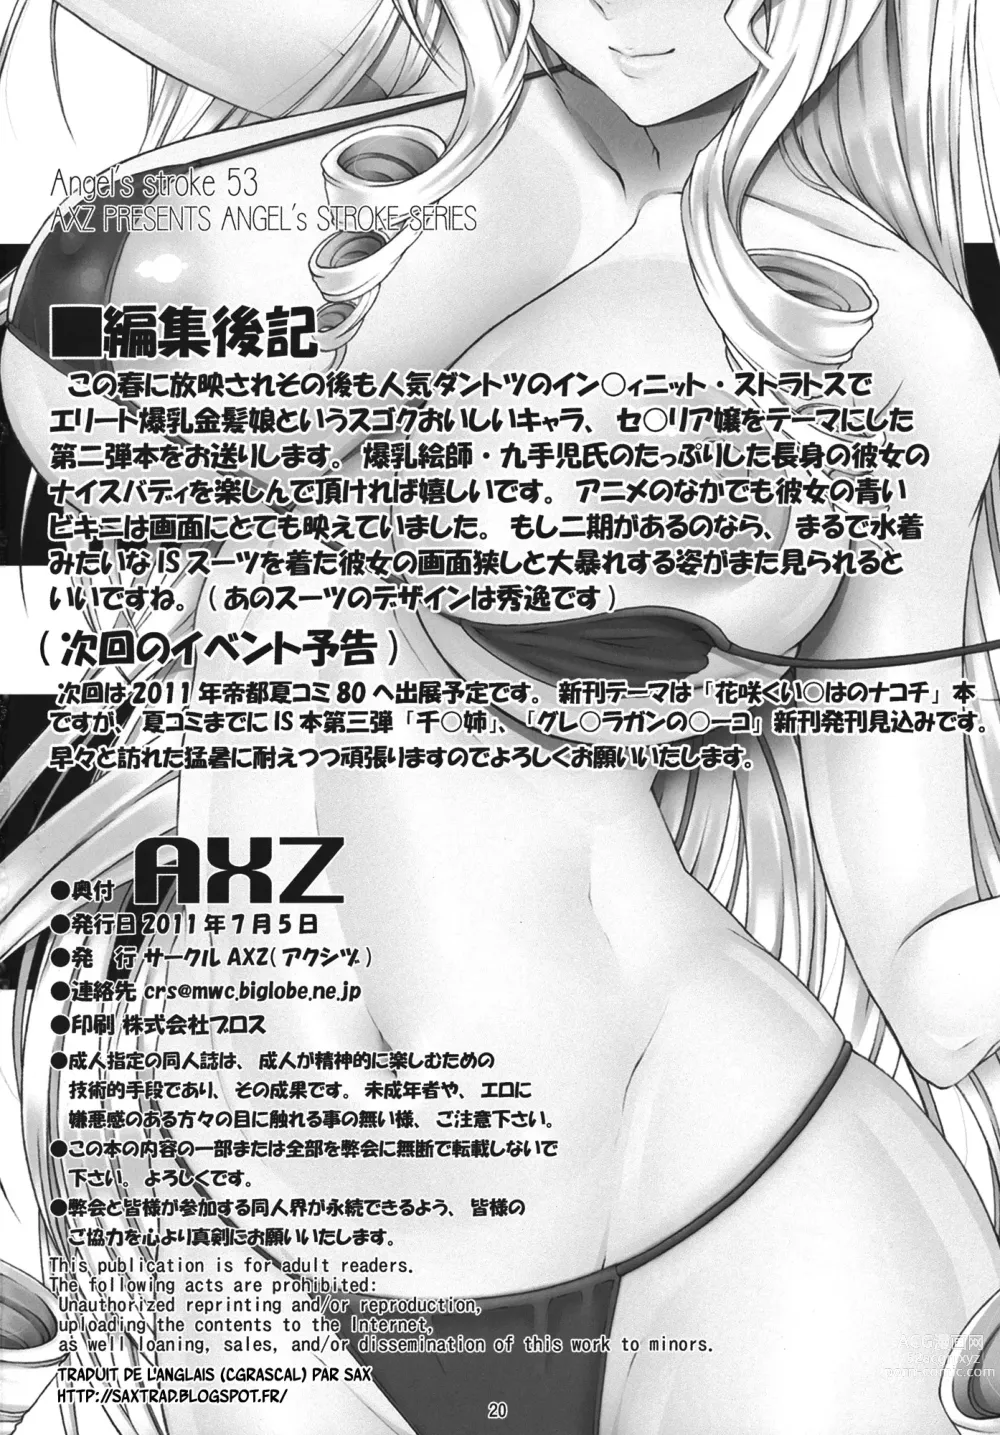 Page 21 of doujinshi Angel’s stroke 53 Infinite Cecilia!